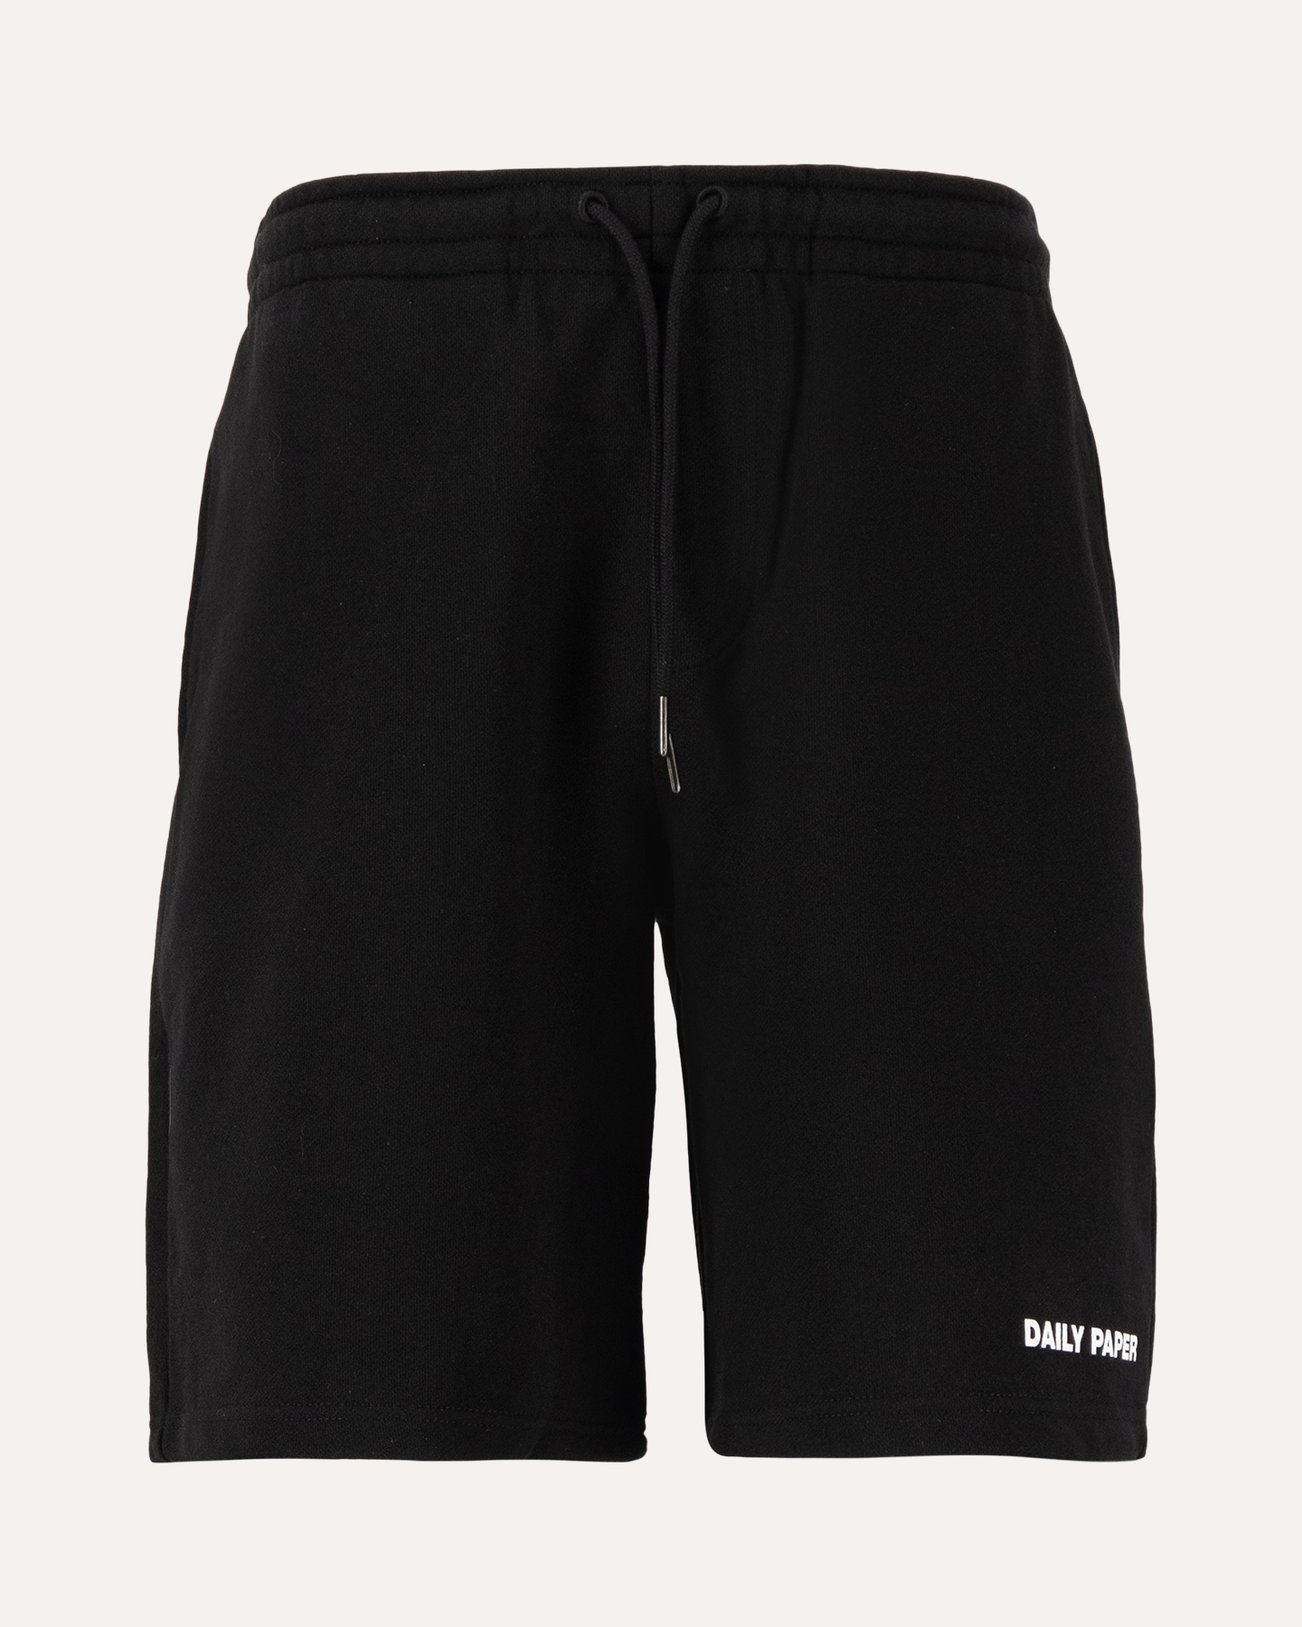 Daily Paper Refarid Shorts BLACK 1